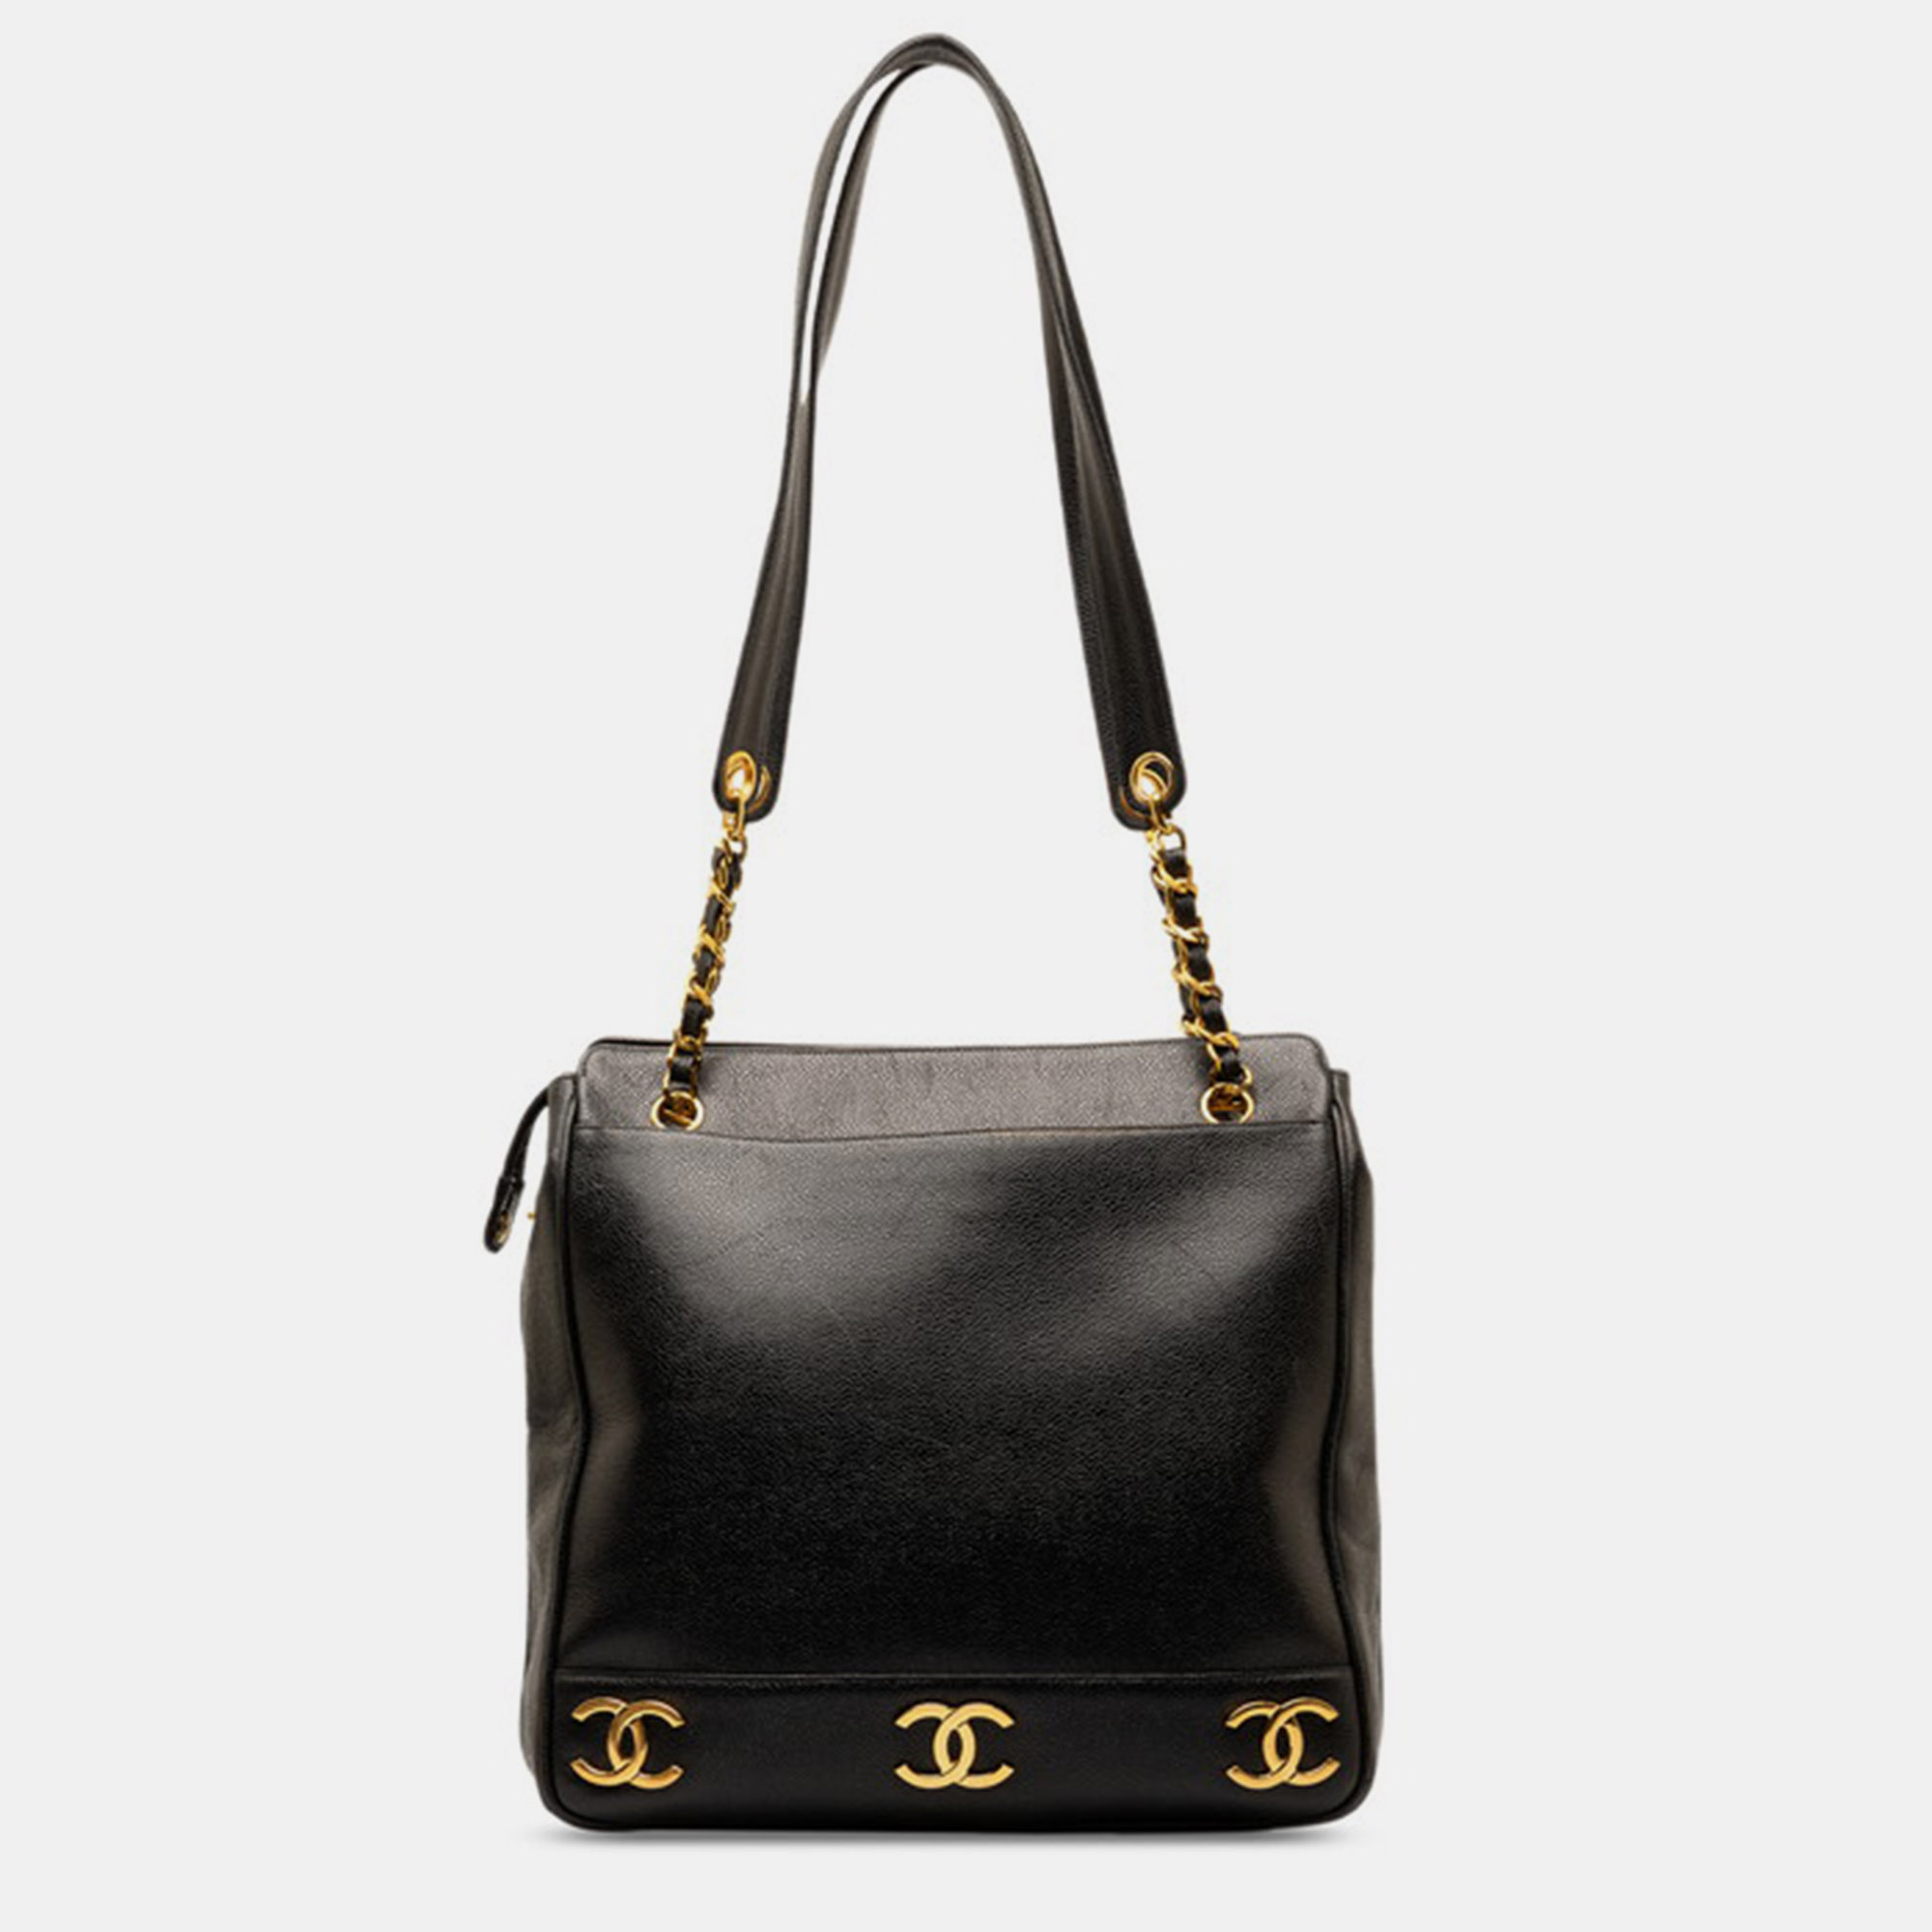 

Chanel Black Caviar Leather CC Tote Bag